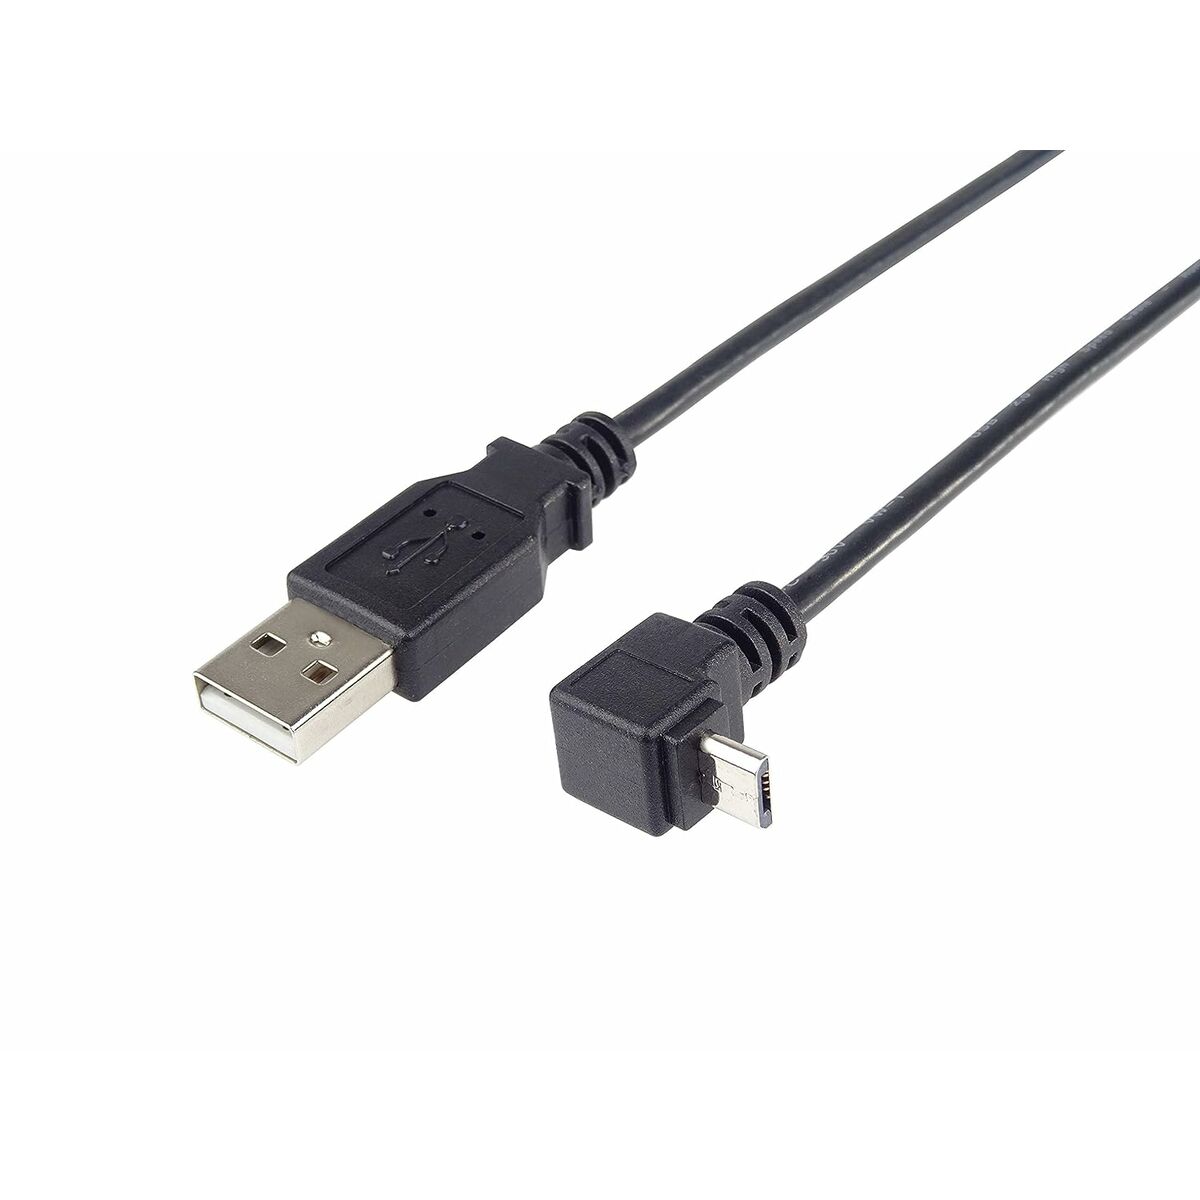 USB Cable to micro USB ku2m1f-90 Black 1 m (Refurbished A)